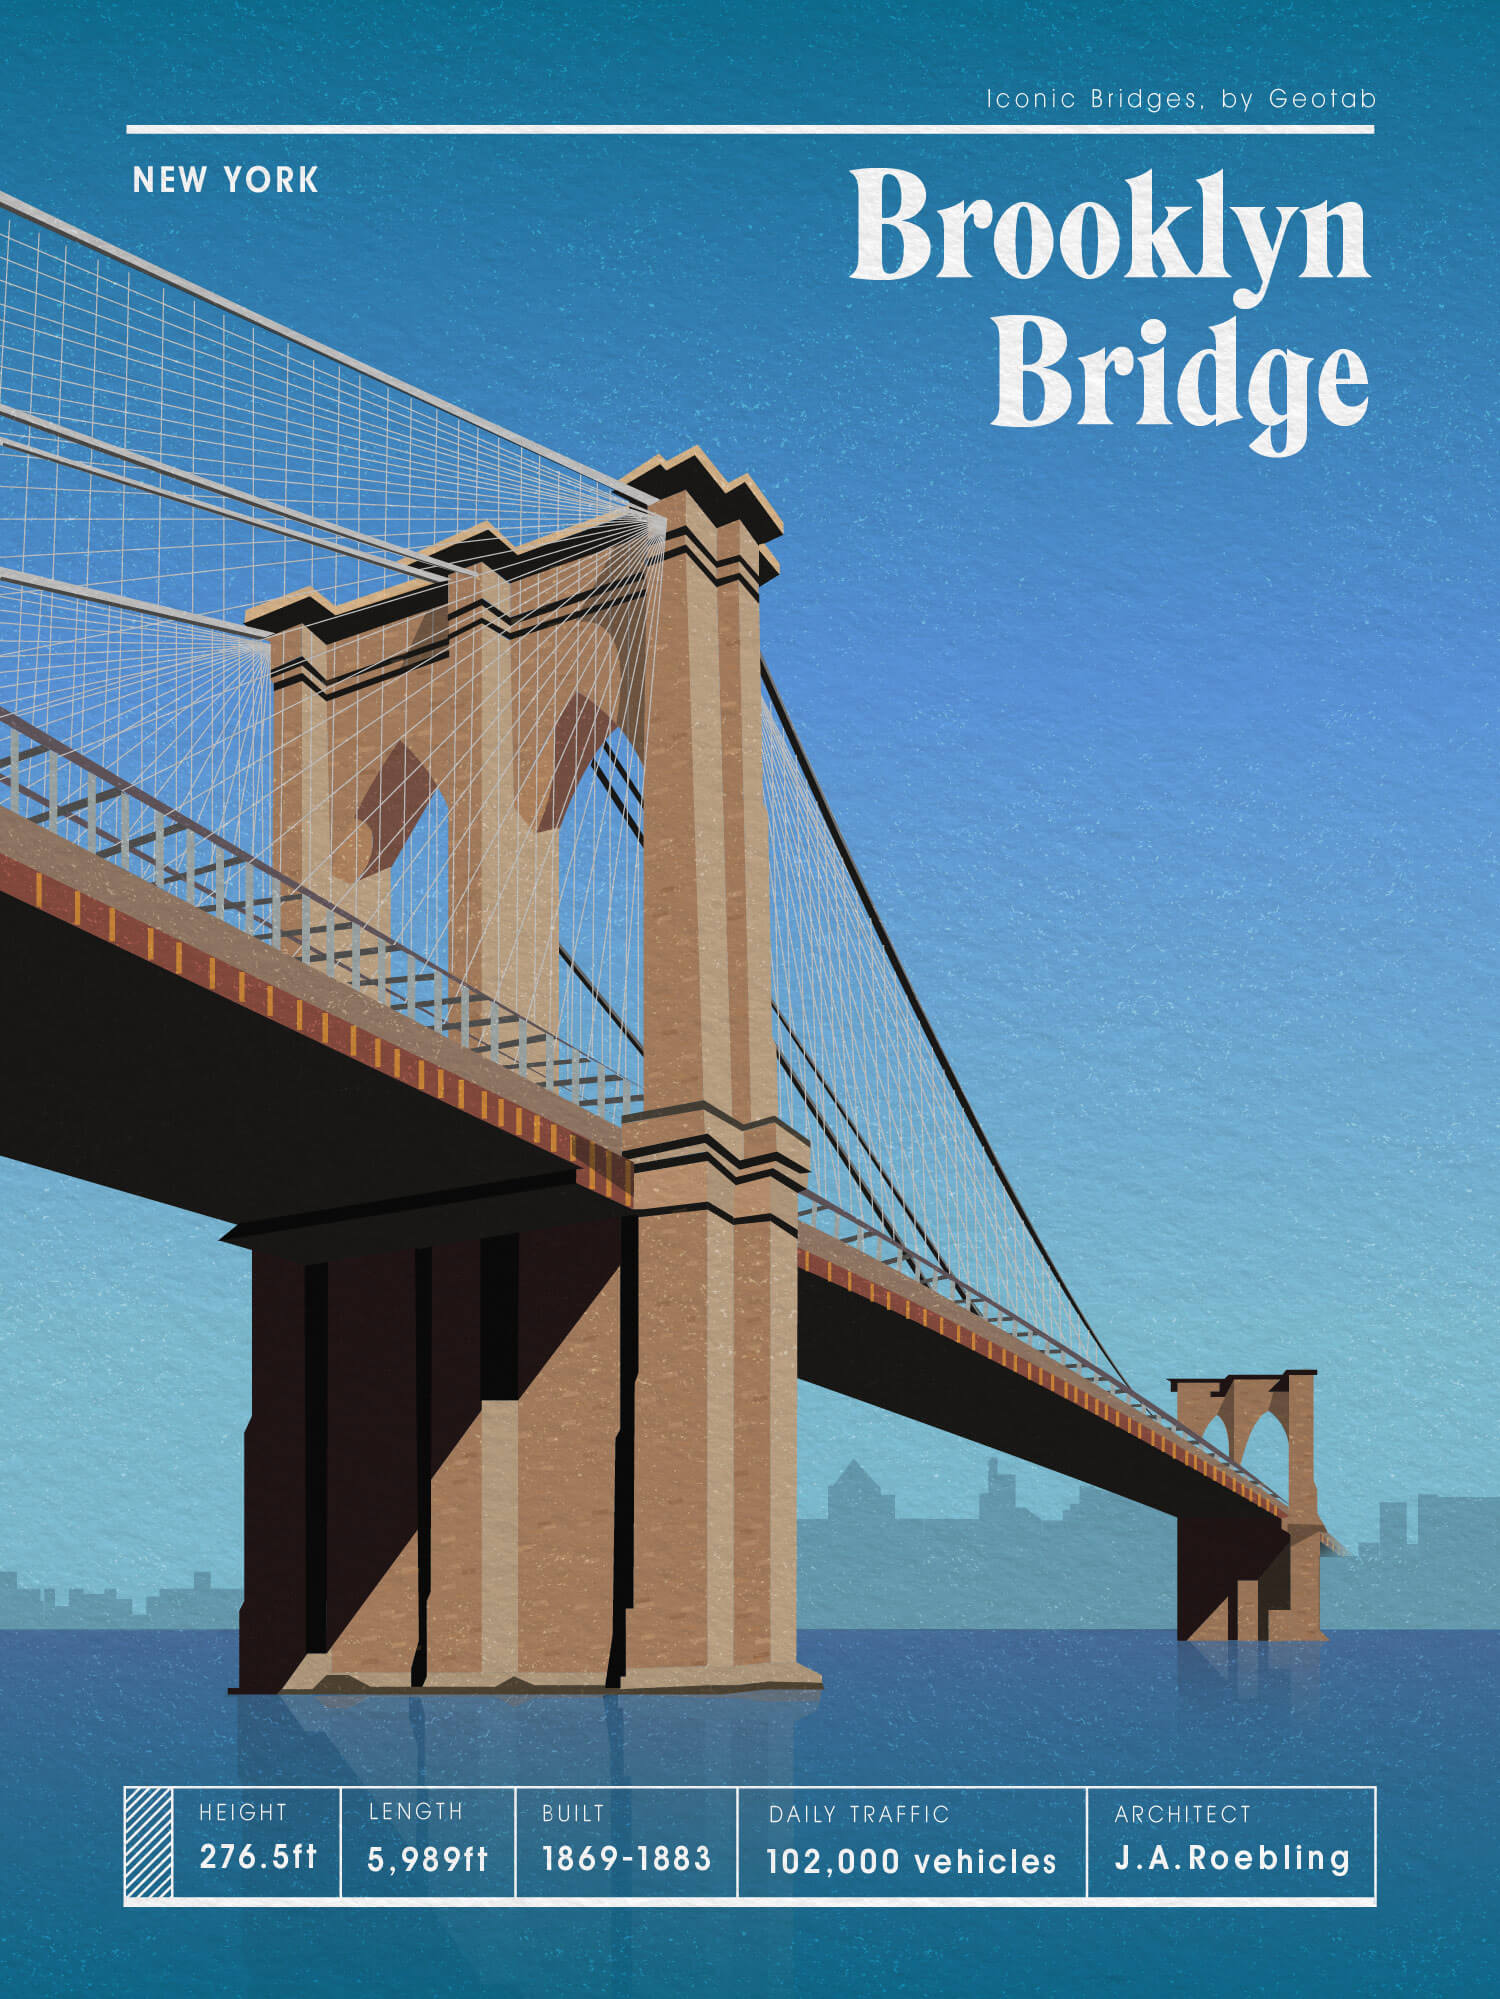 Illustration of Brooklyn Bridge